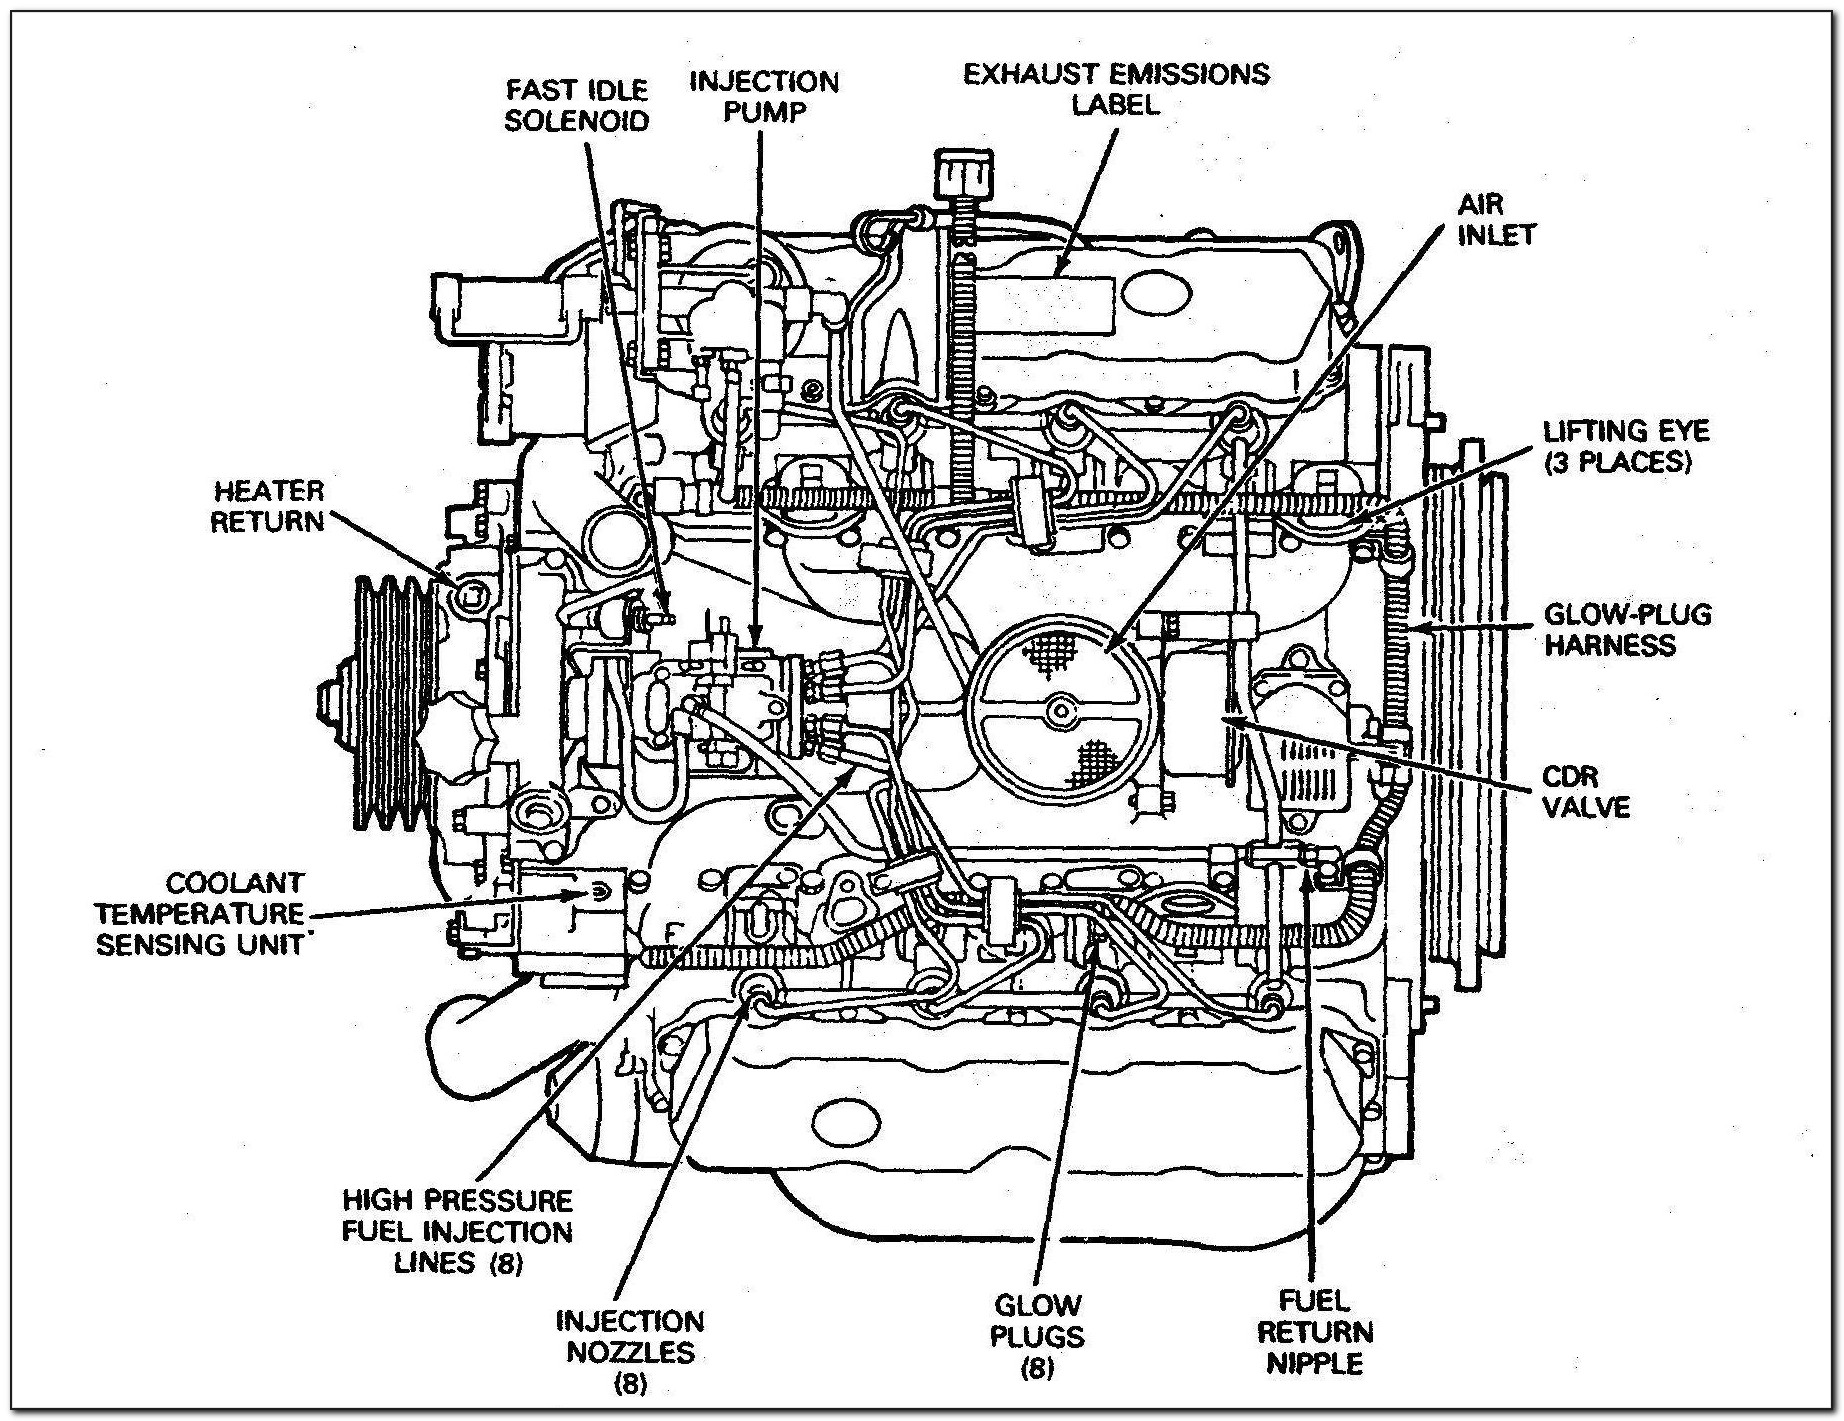 Diesel Engine Diagram Pictures